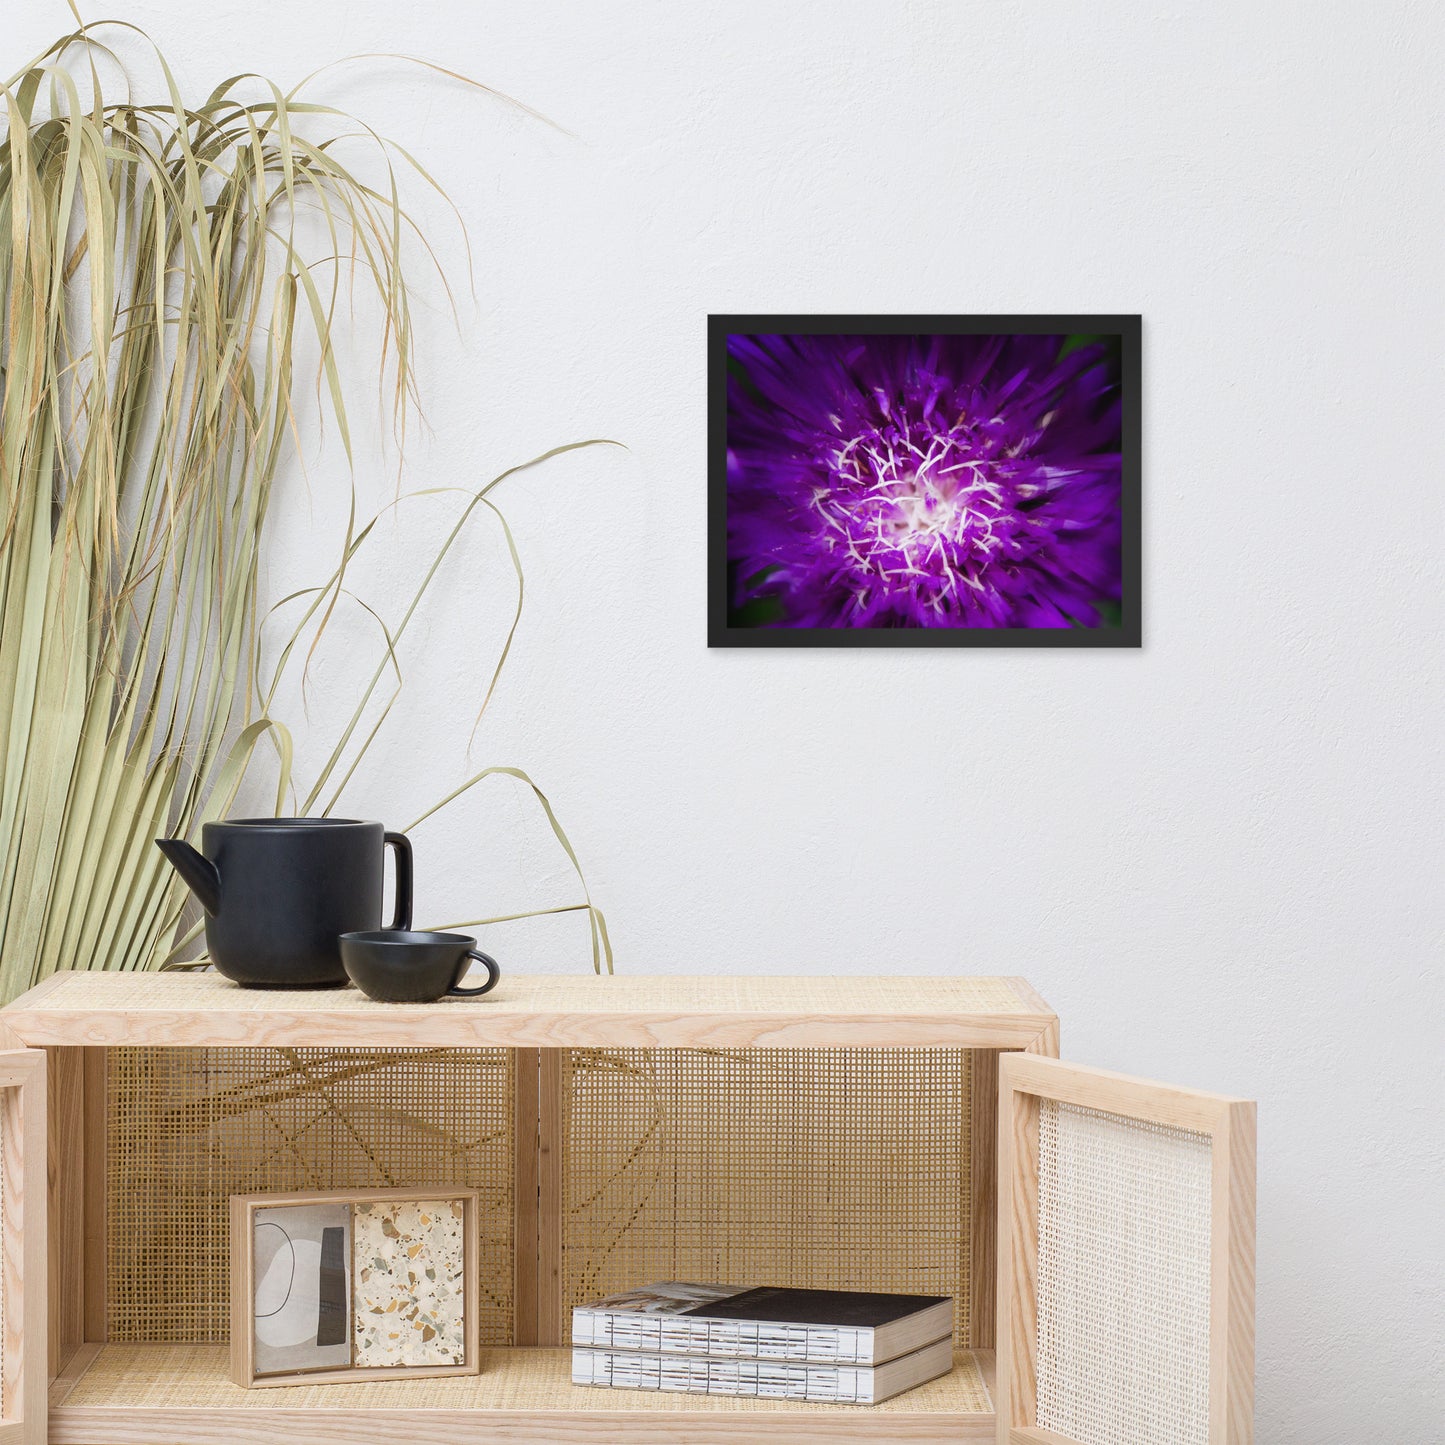 Minimalist Wall Art For Living Room: Purple Abstract Flower - Botanical / Floral / Flora / Flowers / Nature Photograph Framed Wall Art Print - Artwork - Wall Decor